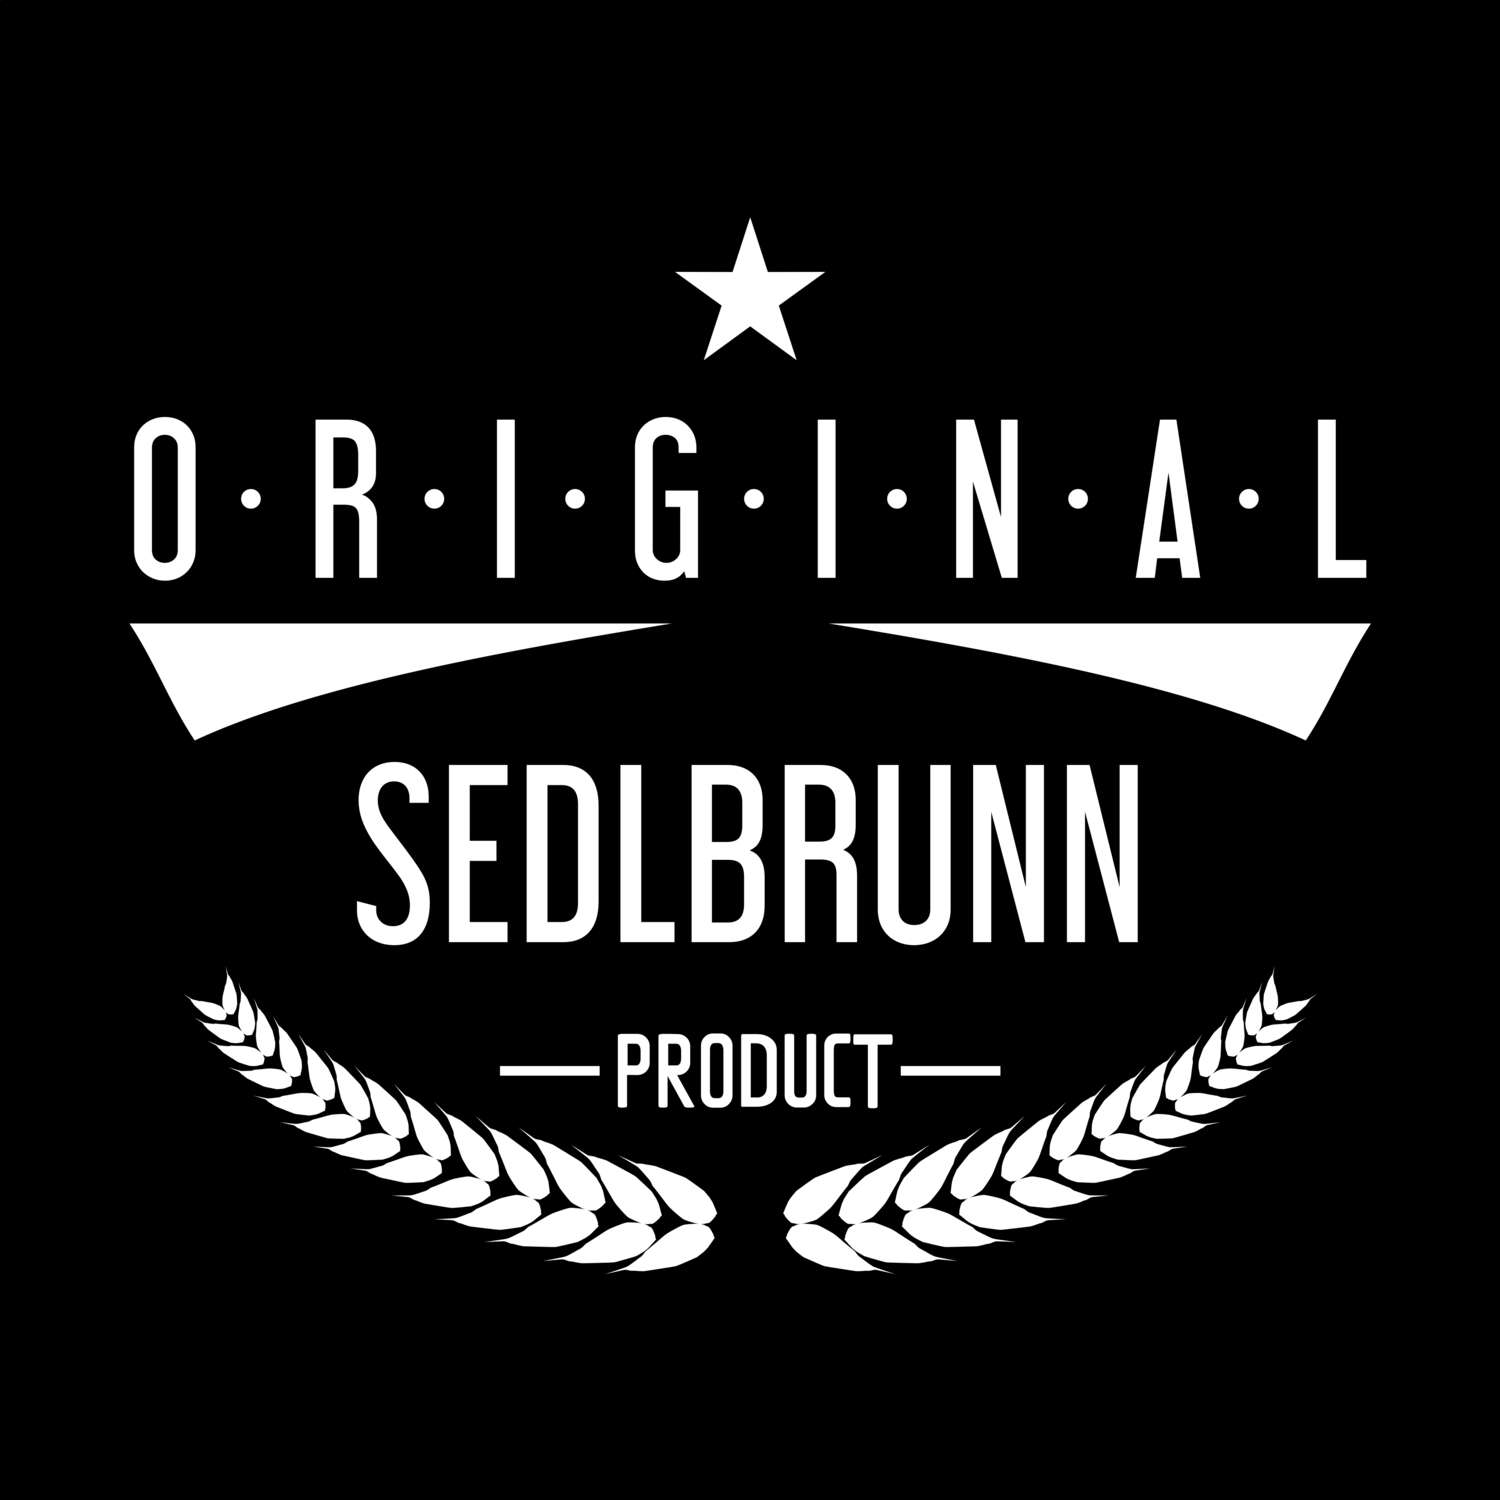 Sedlbrunn T-Shirt »Original Product«